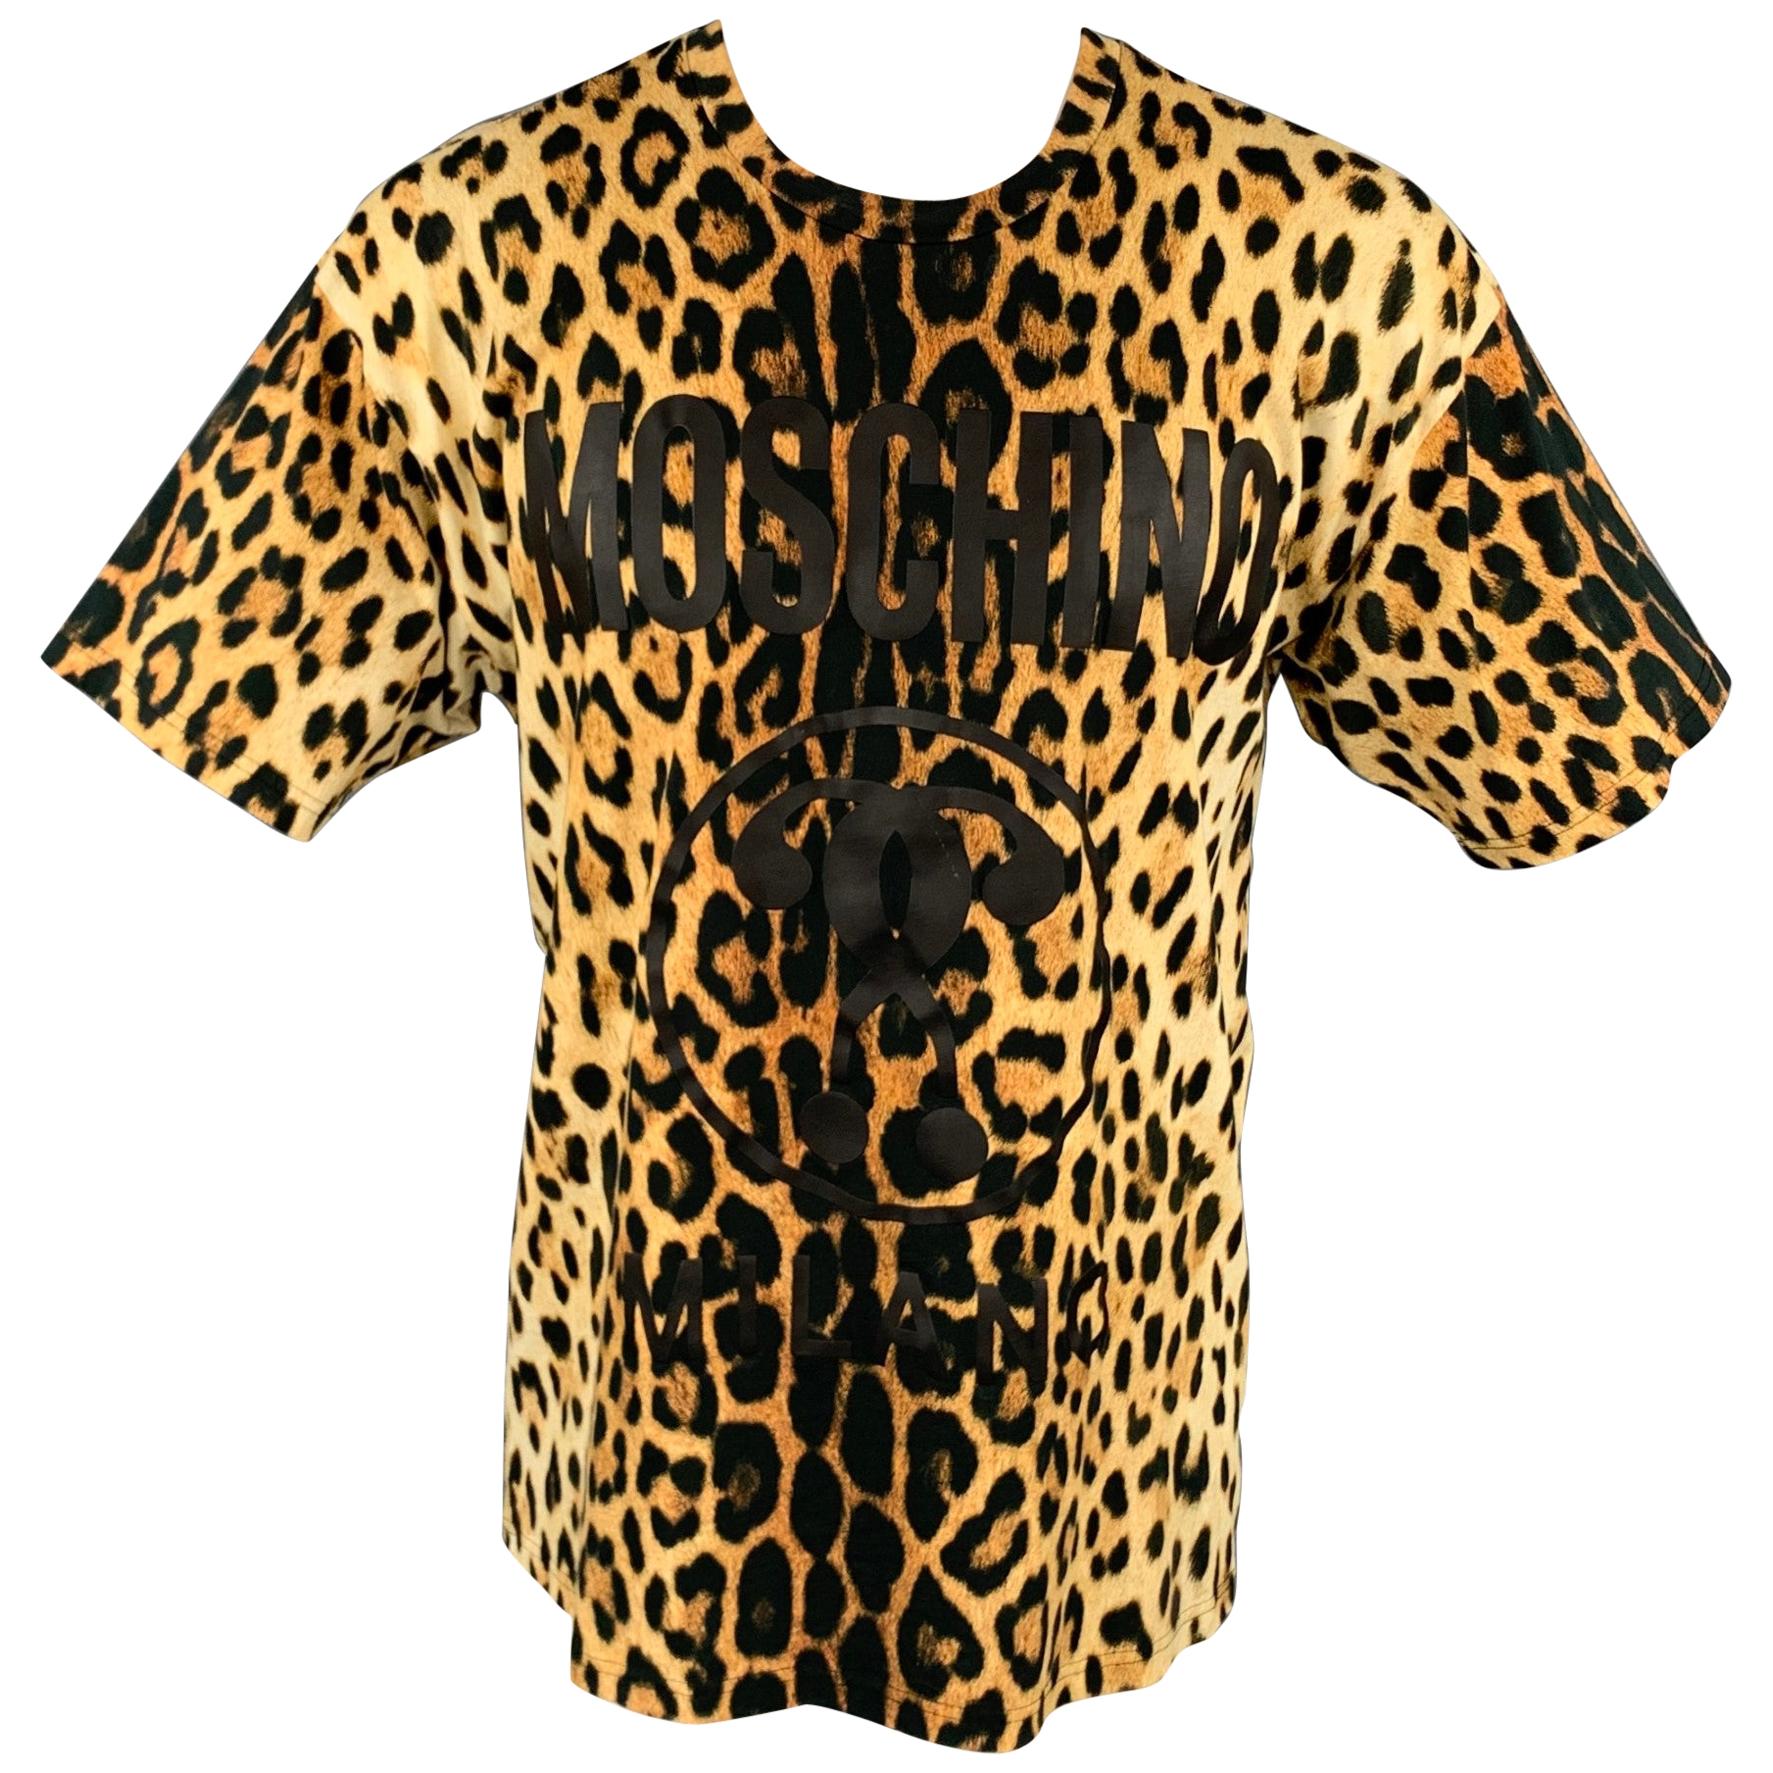 MOSCHINO COUTURE Size L Tan & Black Leopard Print Cotton Crew-Neck T-shirt